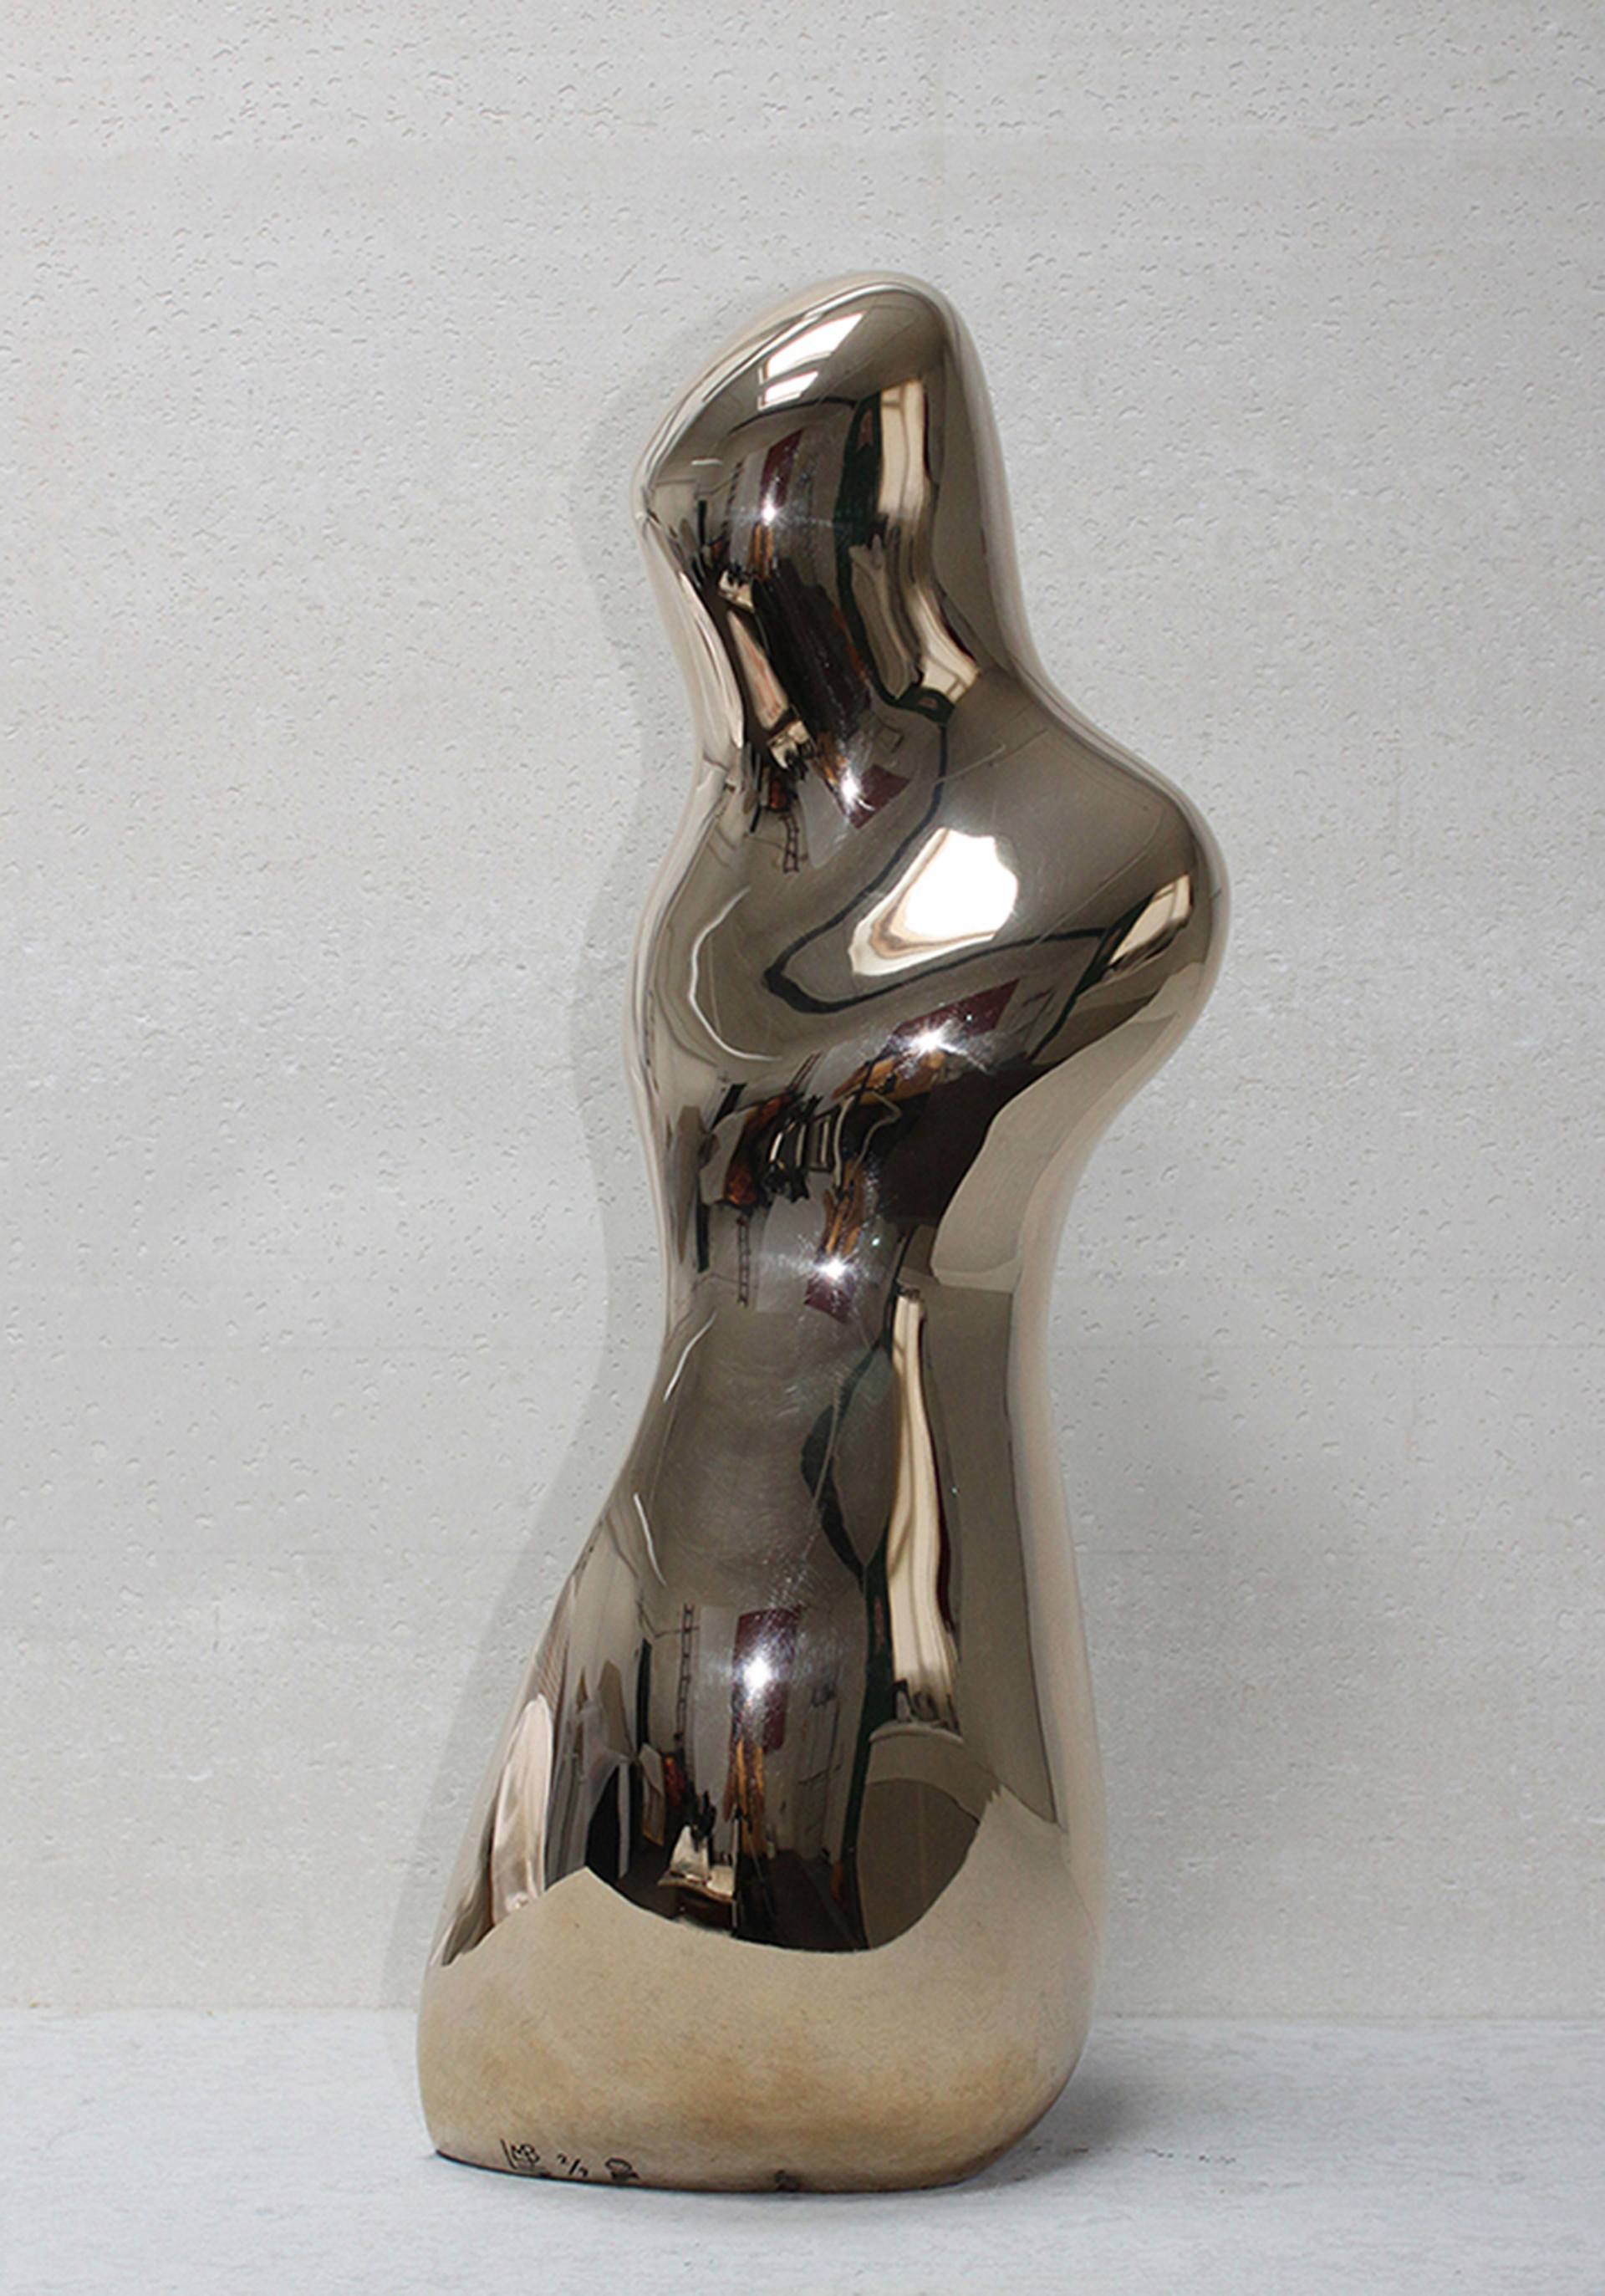 Saatchi Art: Eype Figure Sculpture by Marko Humphrey-Lahti